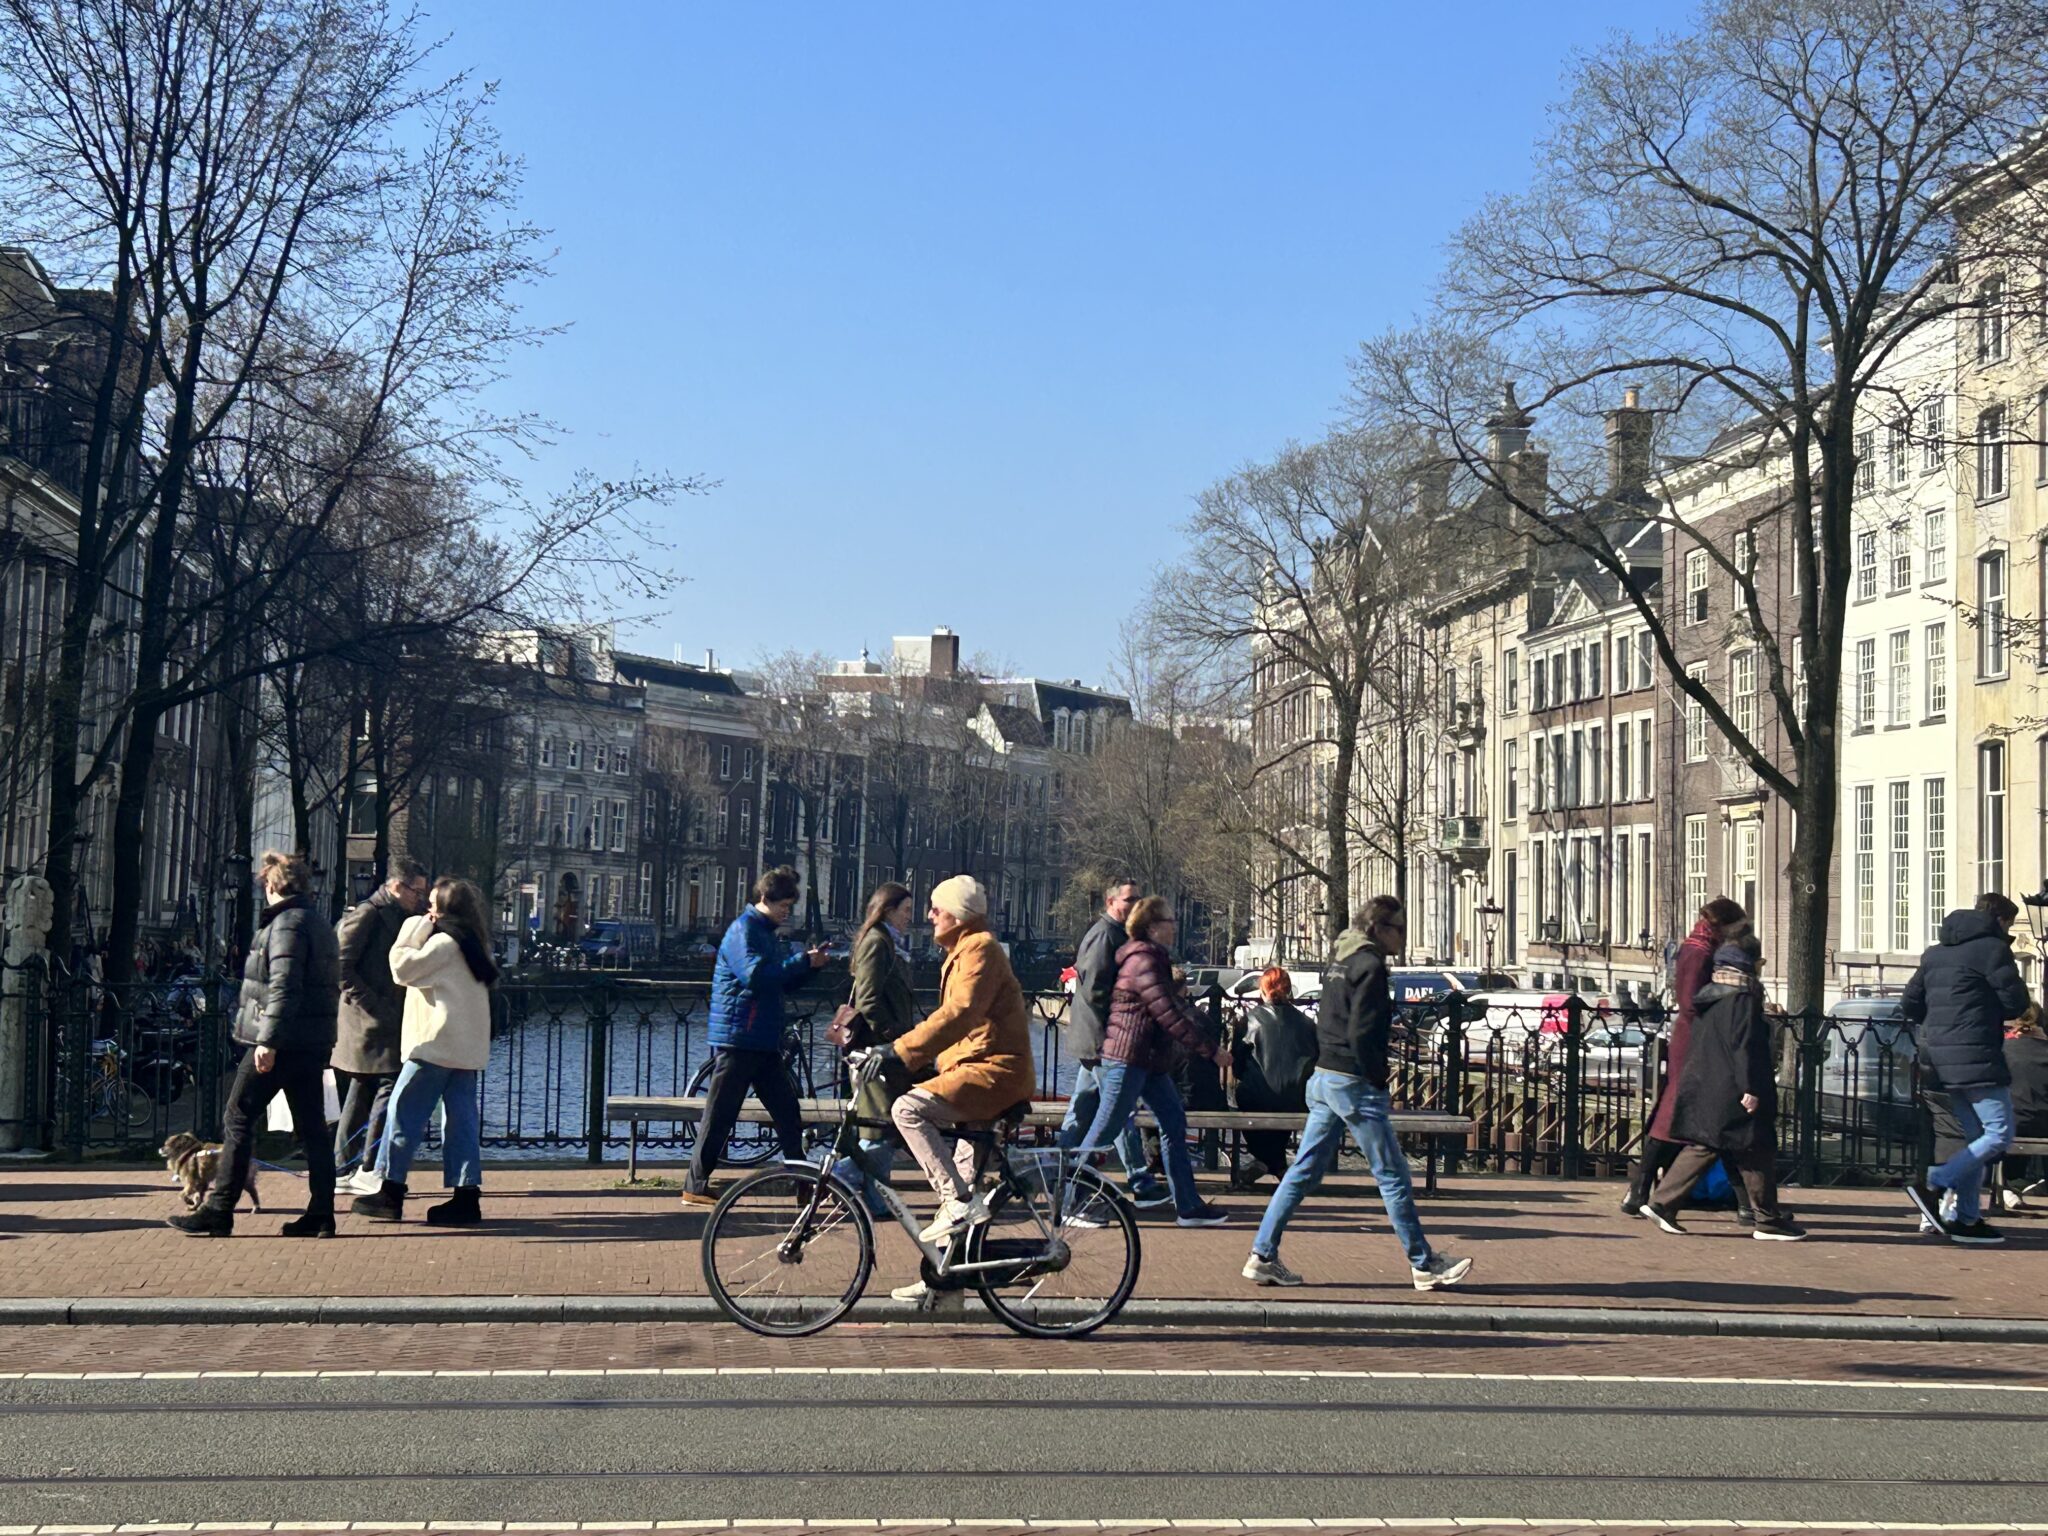 A street scene in central Amsterdam. 